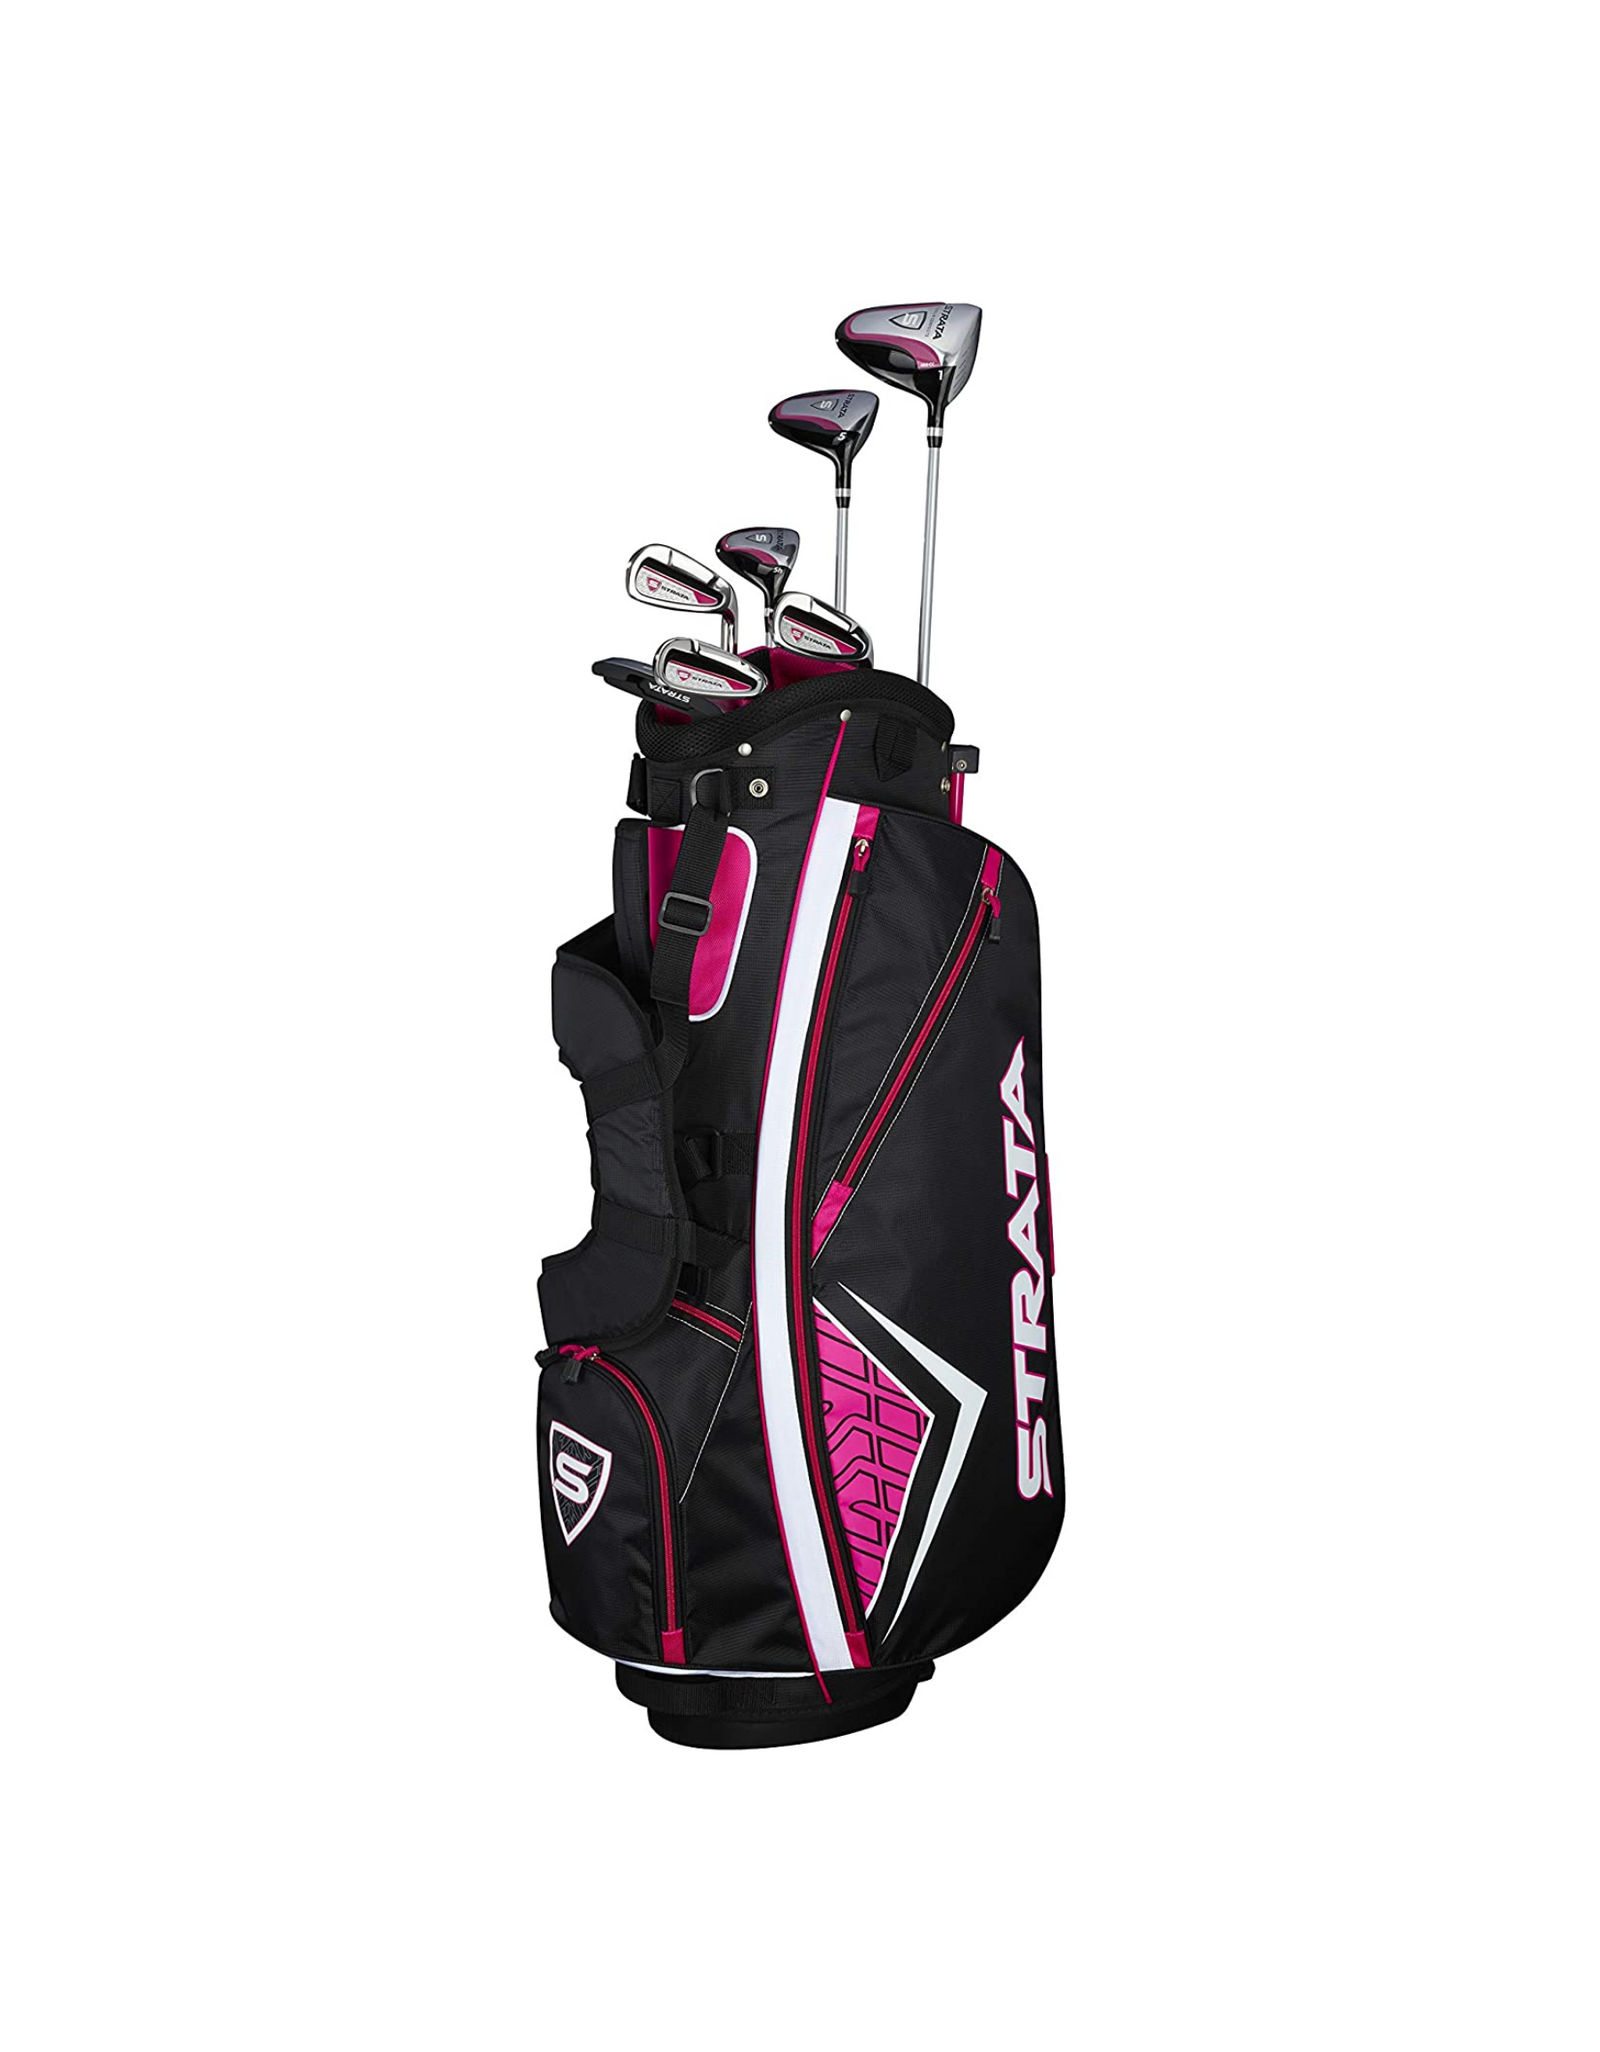 Strata Women's Complete Golf Club Set, Left Hand, 11 Pieces Set, Pink